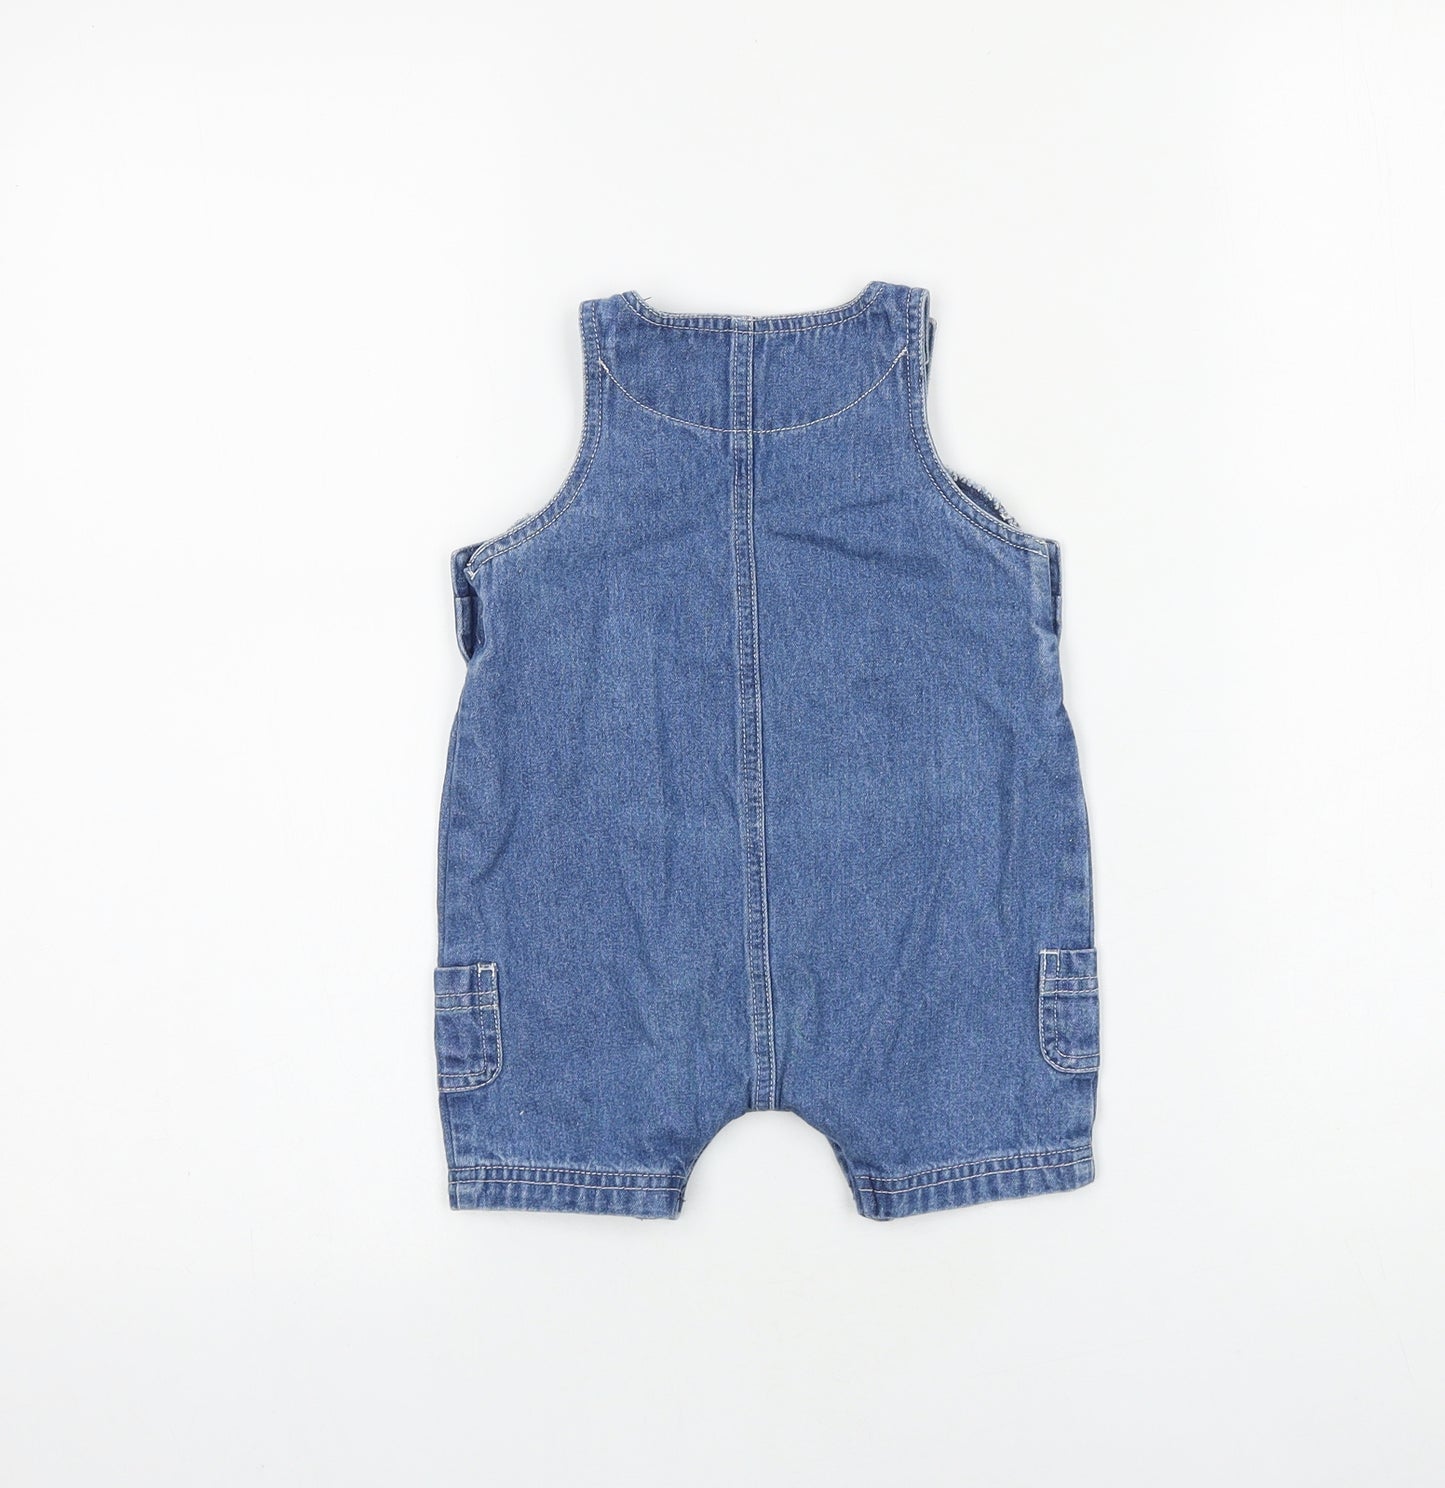 MINIMODE Baby Blue 100% Cotton Romper One-Piece Size 3-6 Months Snap